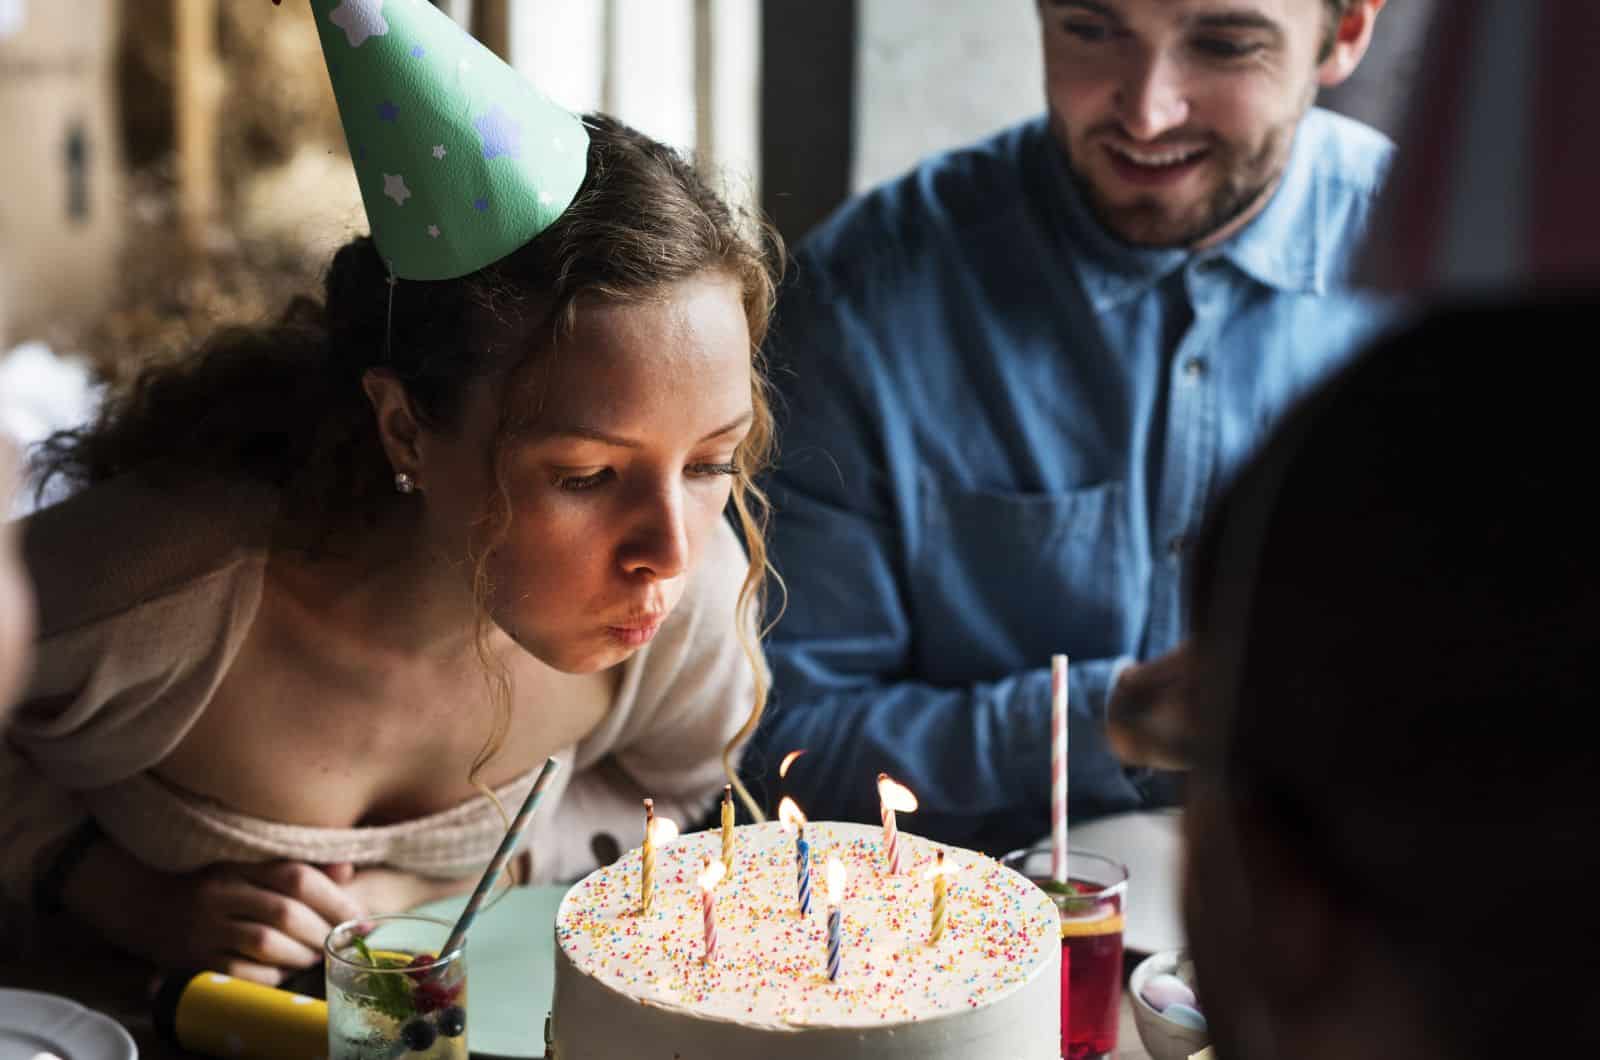 150 Best Birthday Wishes For Girlfriend To Melt Her Heart